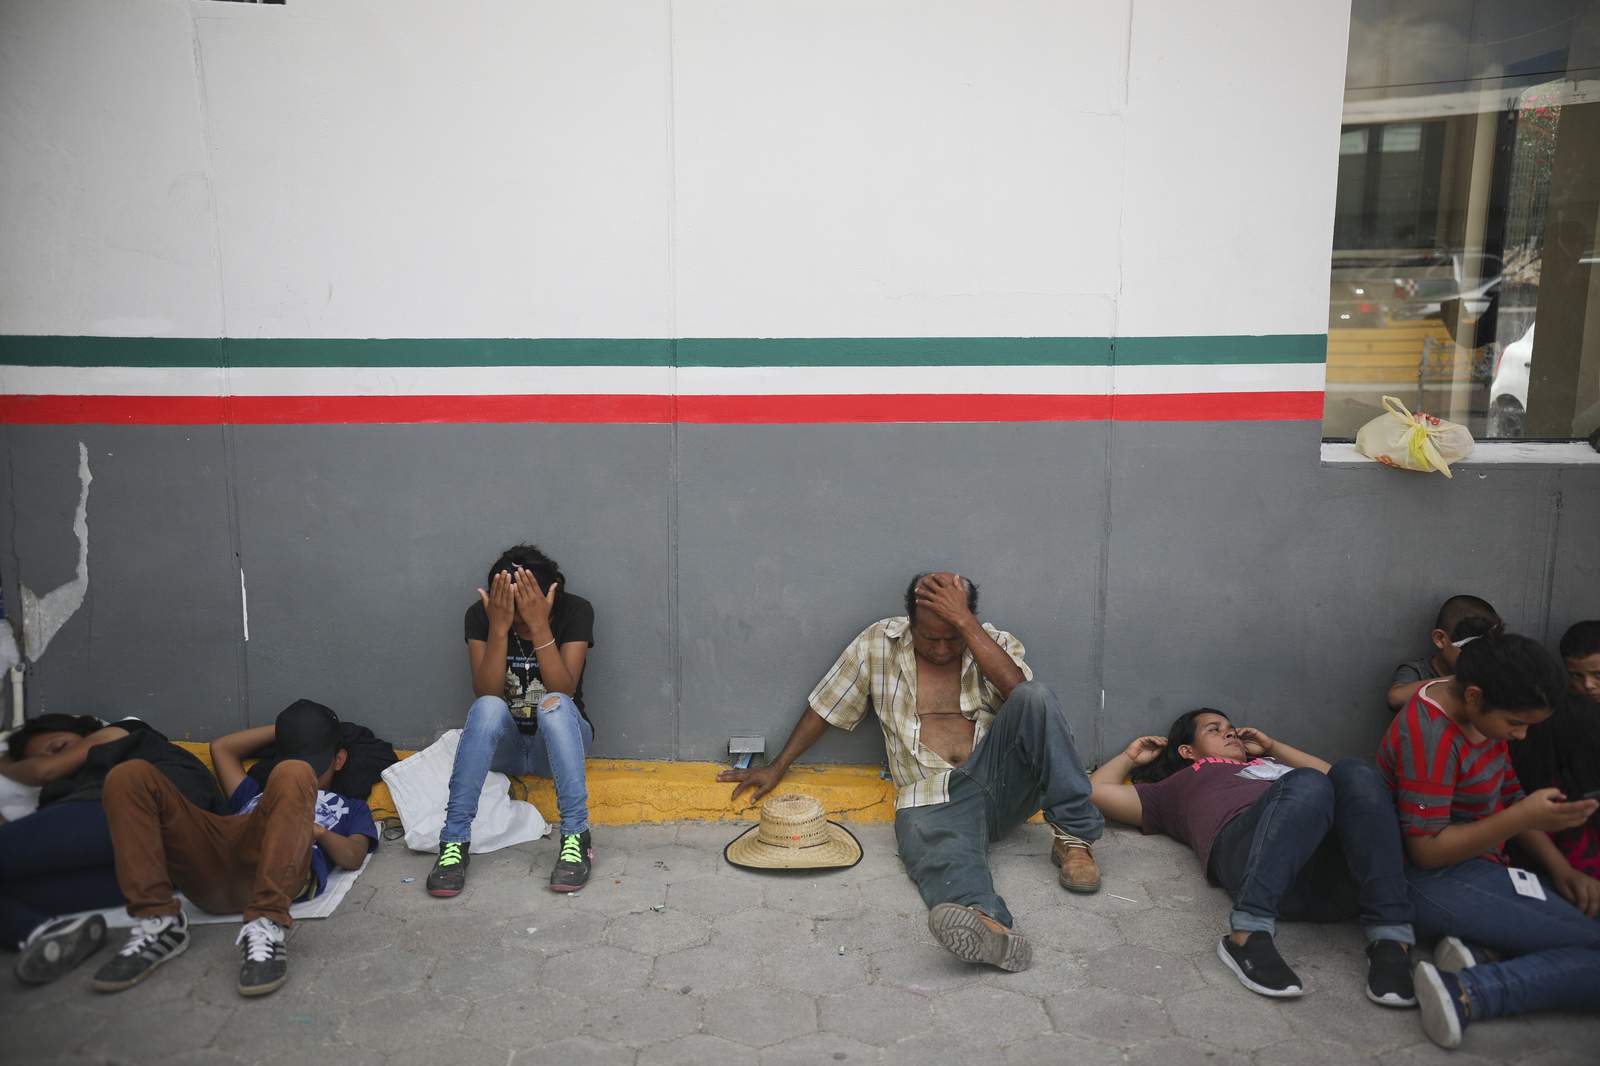 Report: US turning away asylum-seekers at border is flawed